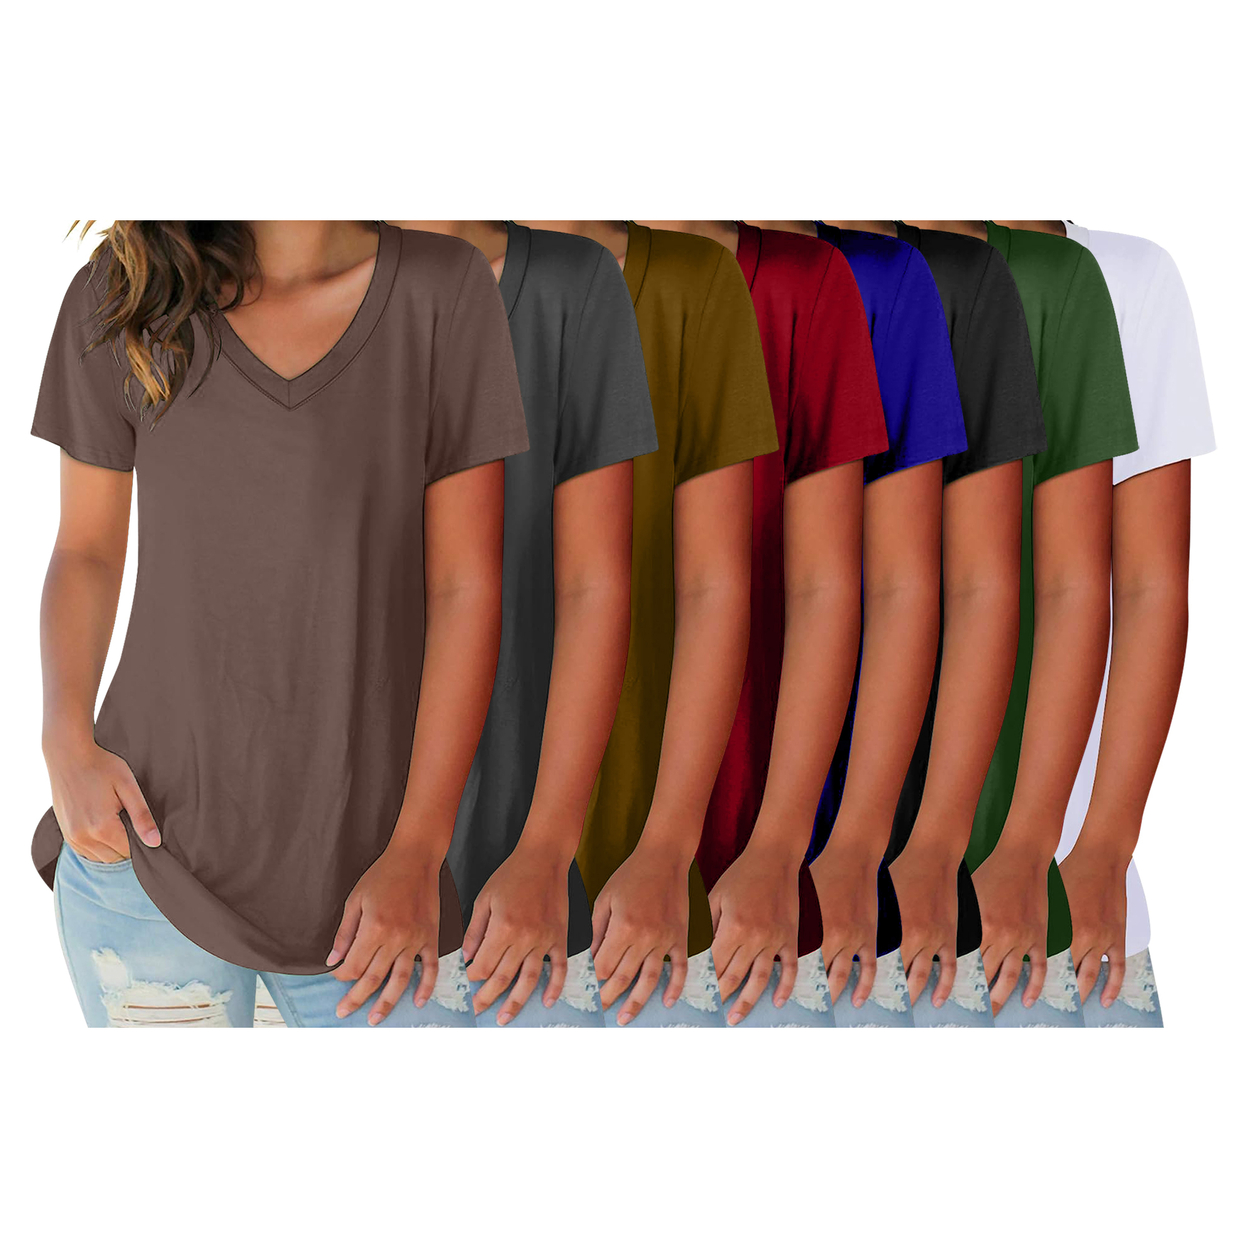 2-Pack: Women's Ultra Soft Smooth Cotton Blend Basic V-Neck Short Sleeve Shirts - Navy & Red, X-large